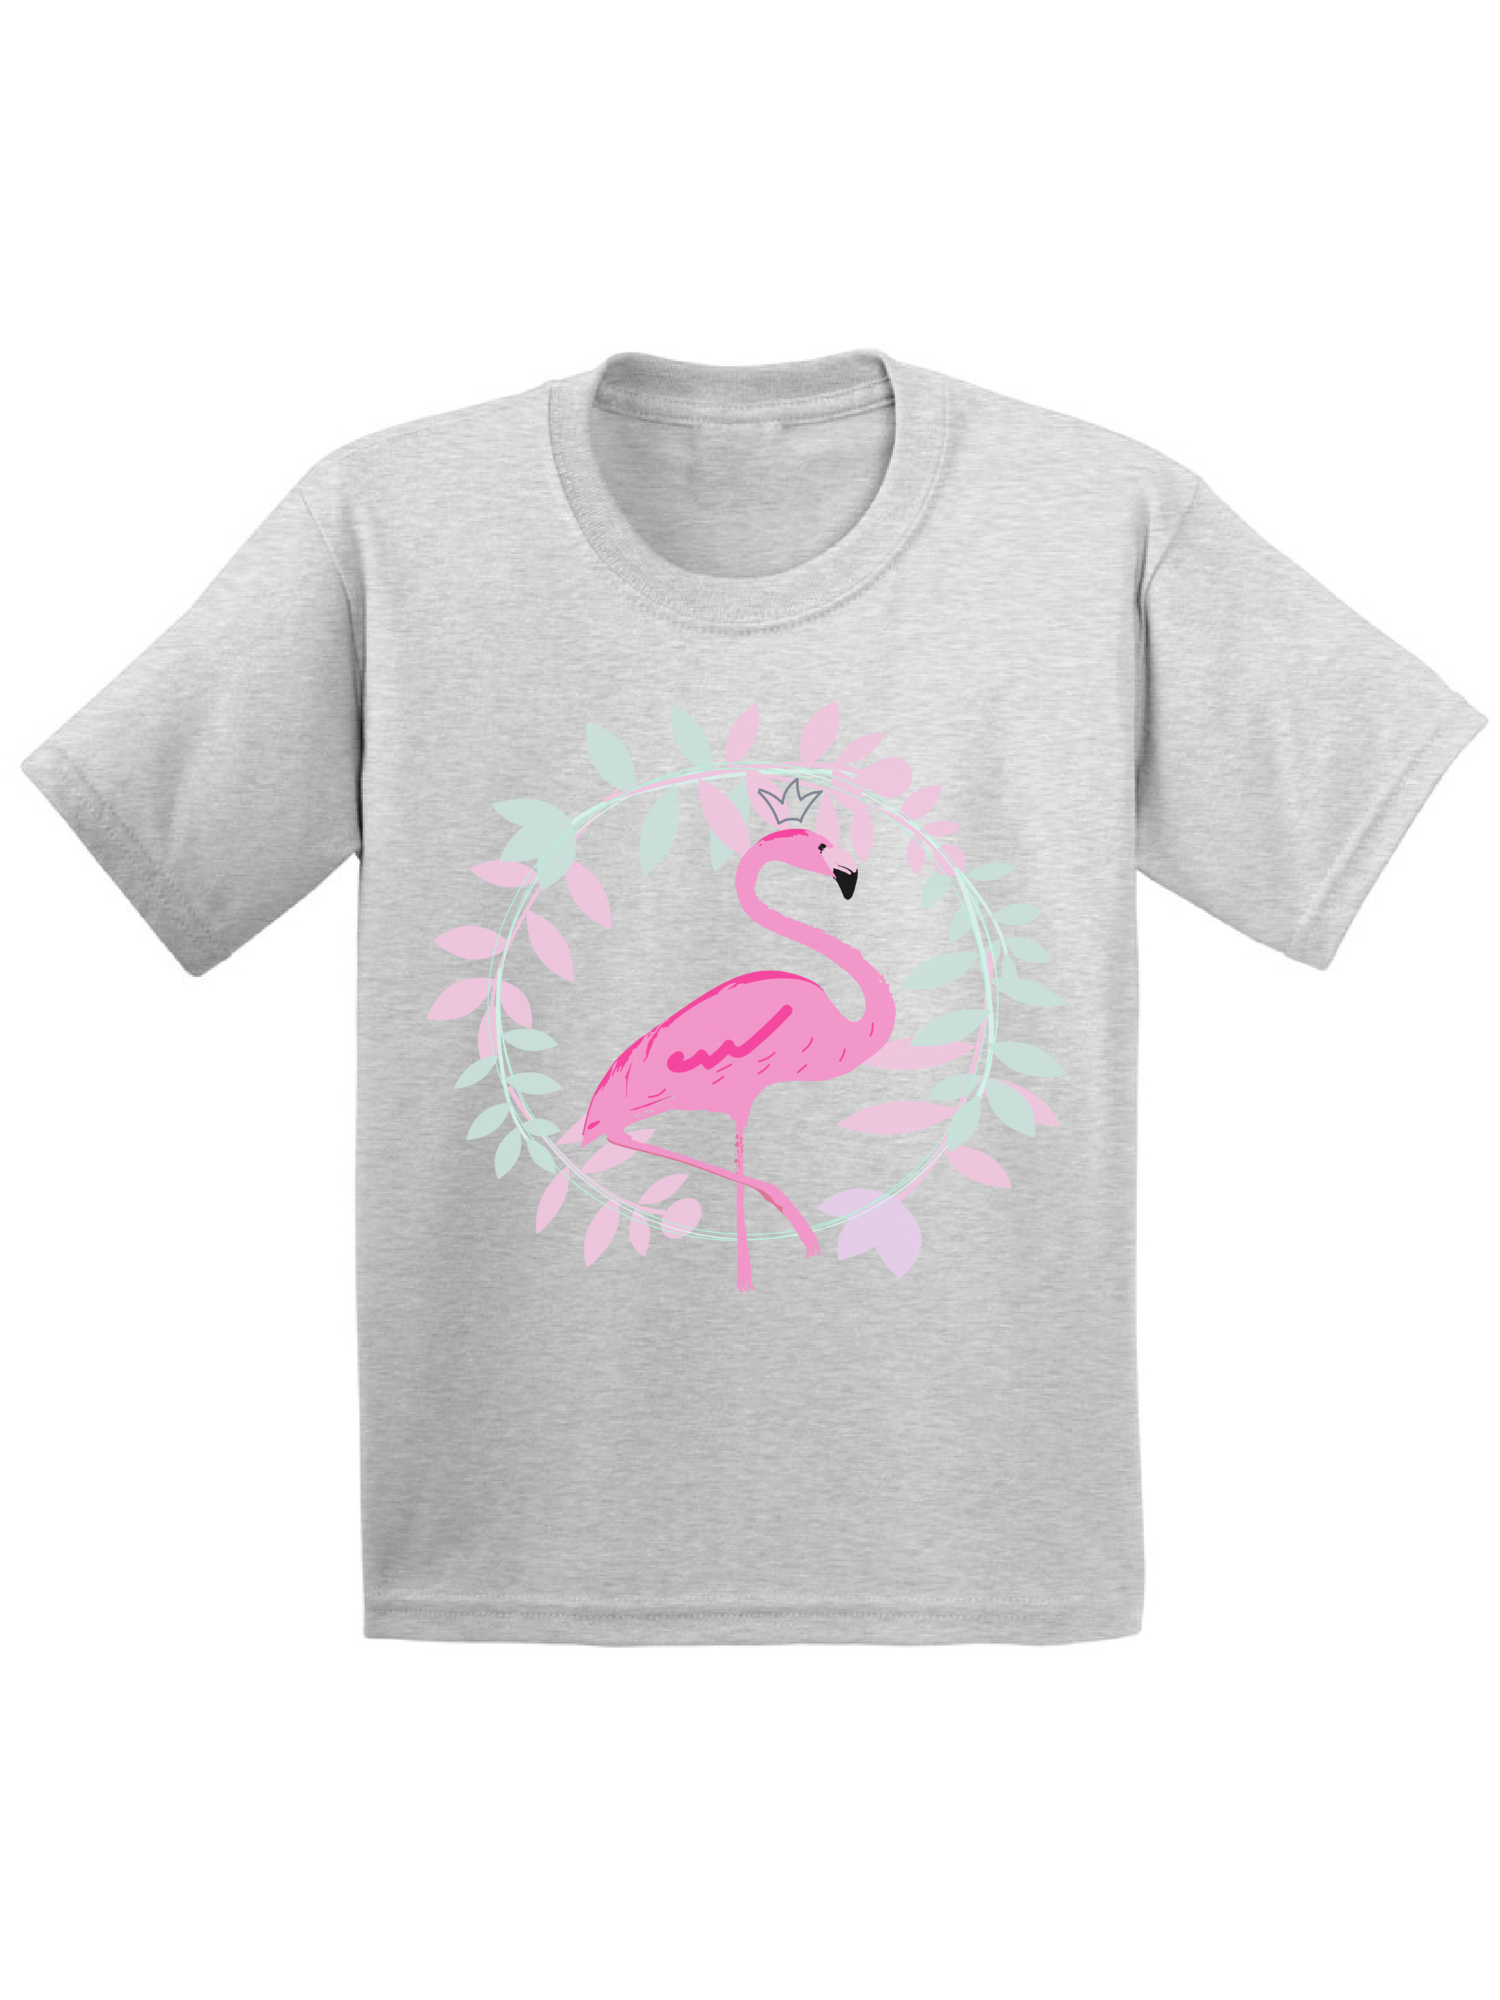 Awkward Styles Flamingo Crown Infant Shirt Cute Summer Shirt for Kids Pink Flamingo T Shirt for Boys Pink Flamingo Shirts for Girls Cute Flamingo T-Shirt for Children Summer Gifts for Little One - image 1 of 4